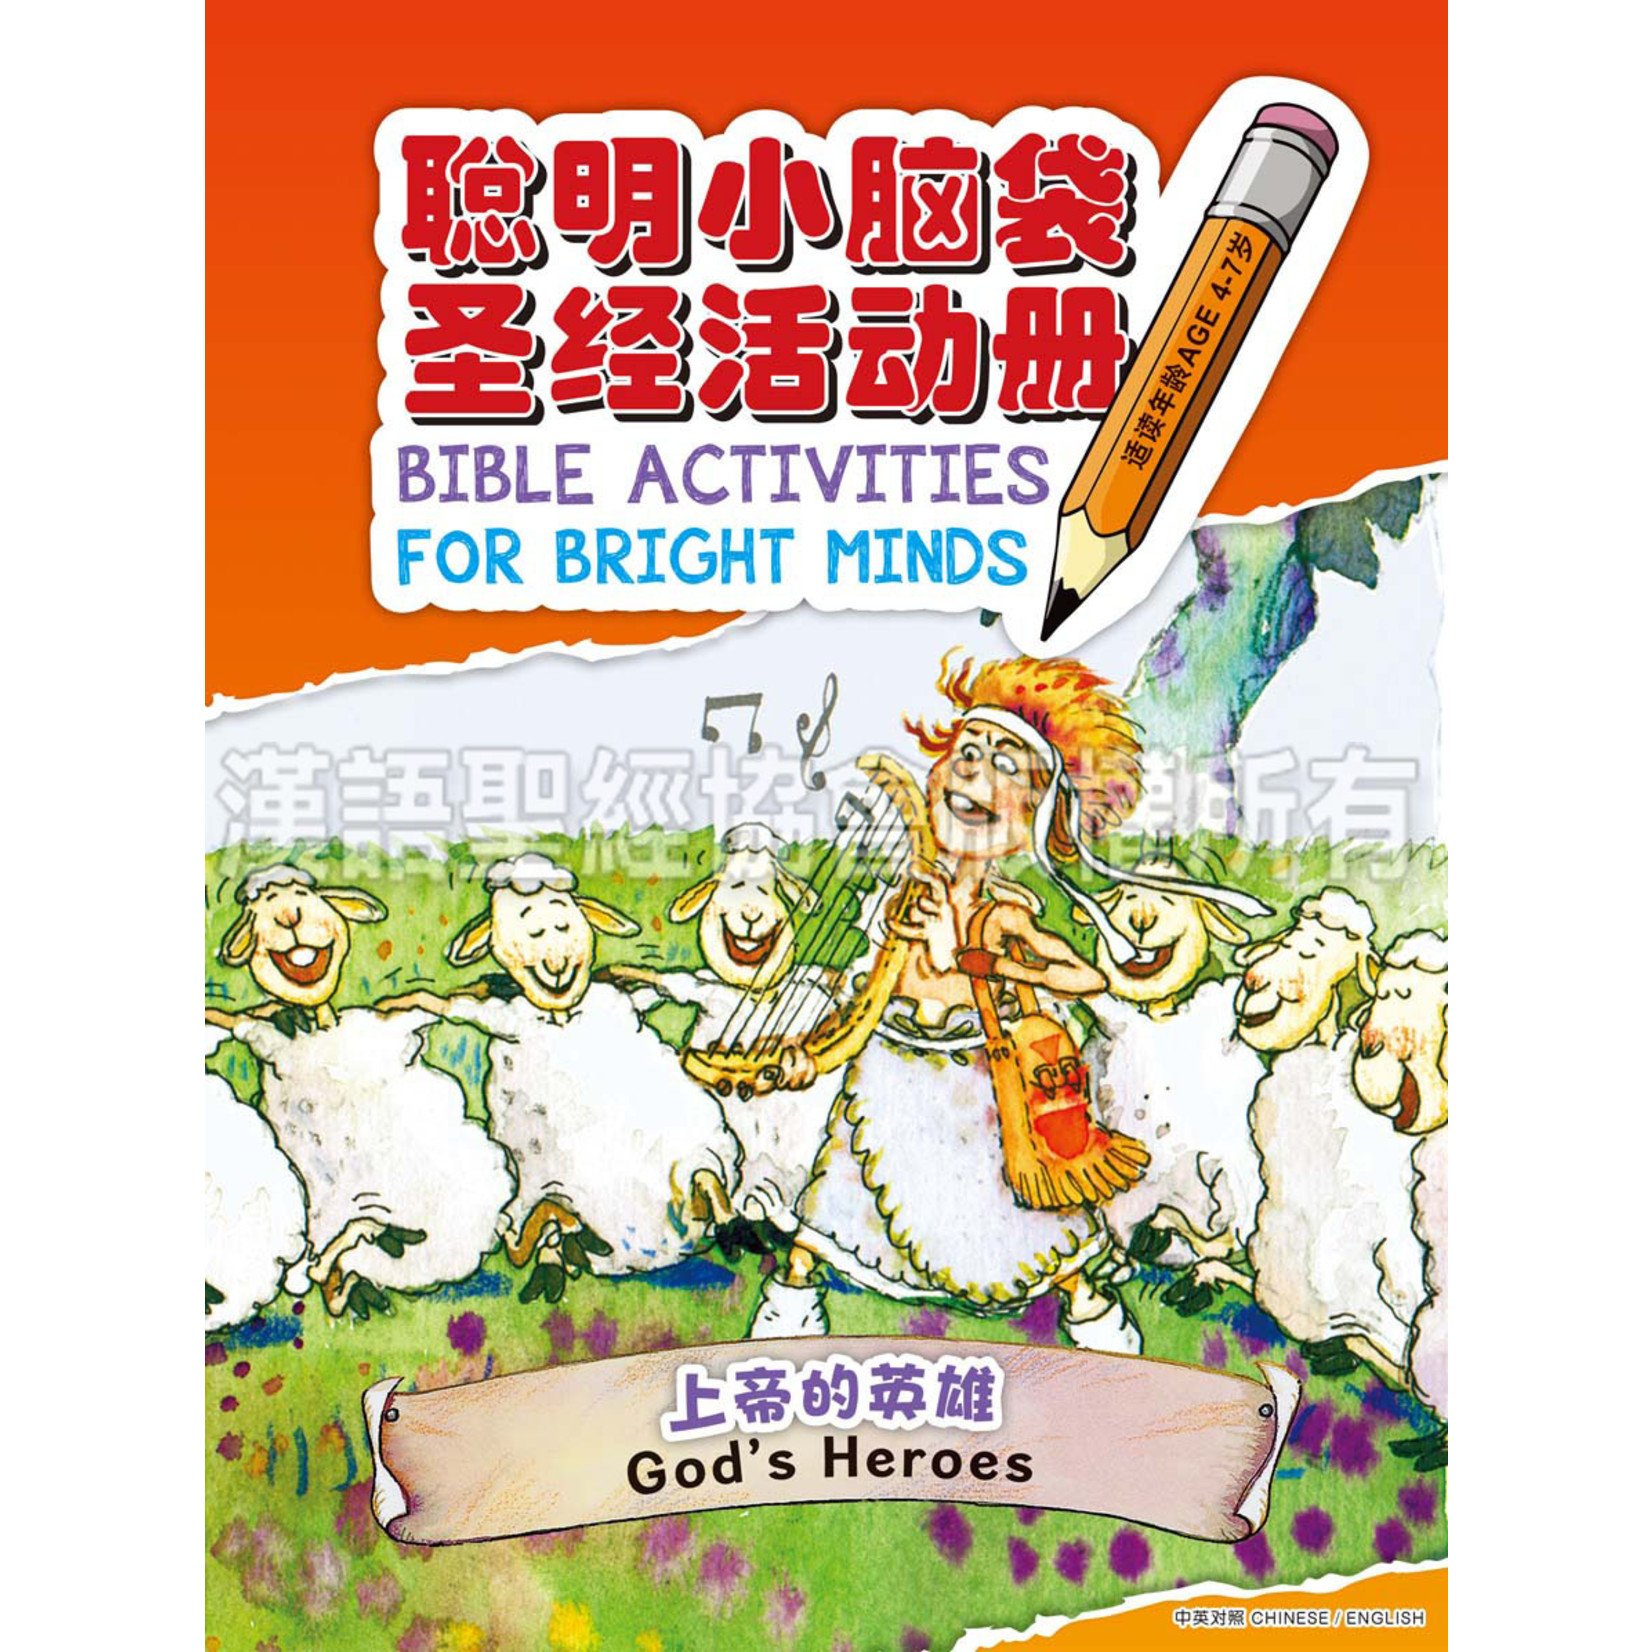 漢語聖經協會 Chinese Bible International 聪明小脑袋圣经活动册．上帝的英雄（简体中文／英文） | Bible Activities for Bright Minds - God's Heroes, Simplified Chinese/English, Paperback